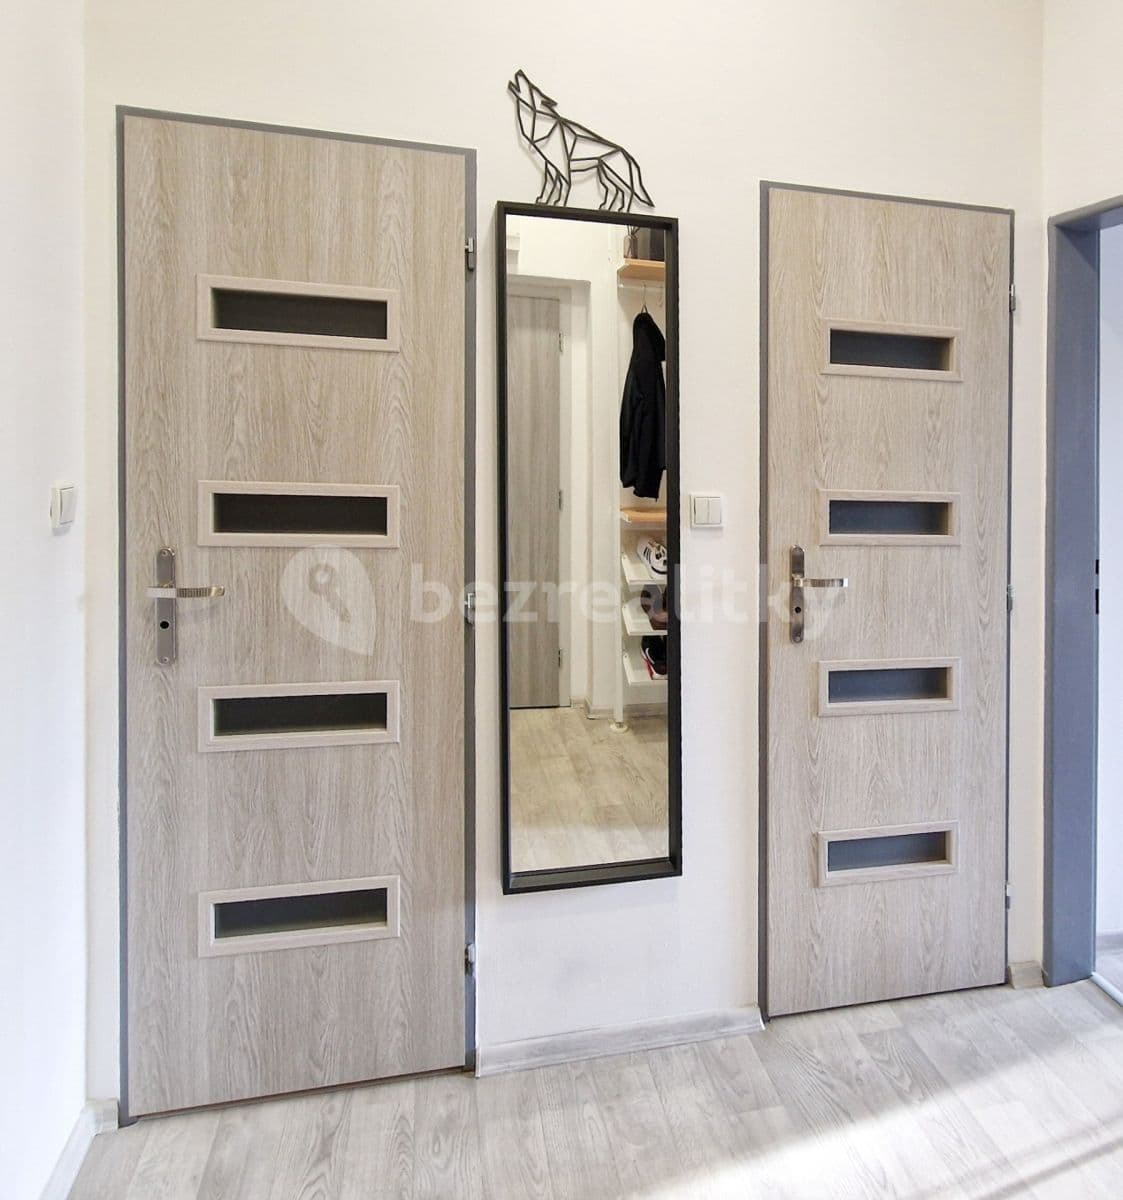 1 bedroom flat for sale, 46 m², Králova výšina, Ústí nad Labem, Ústecký Region